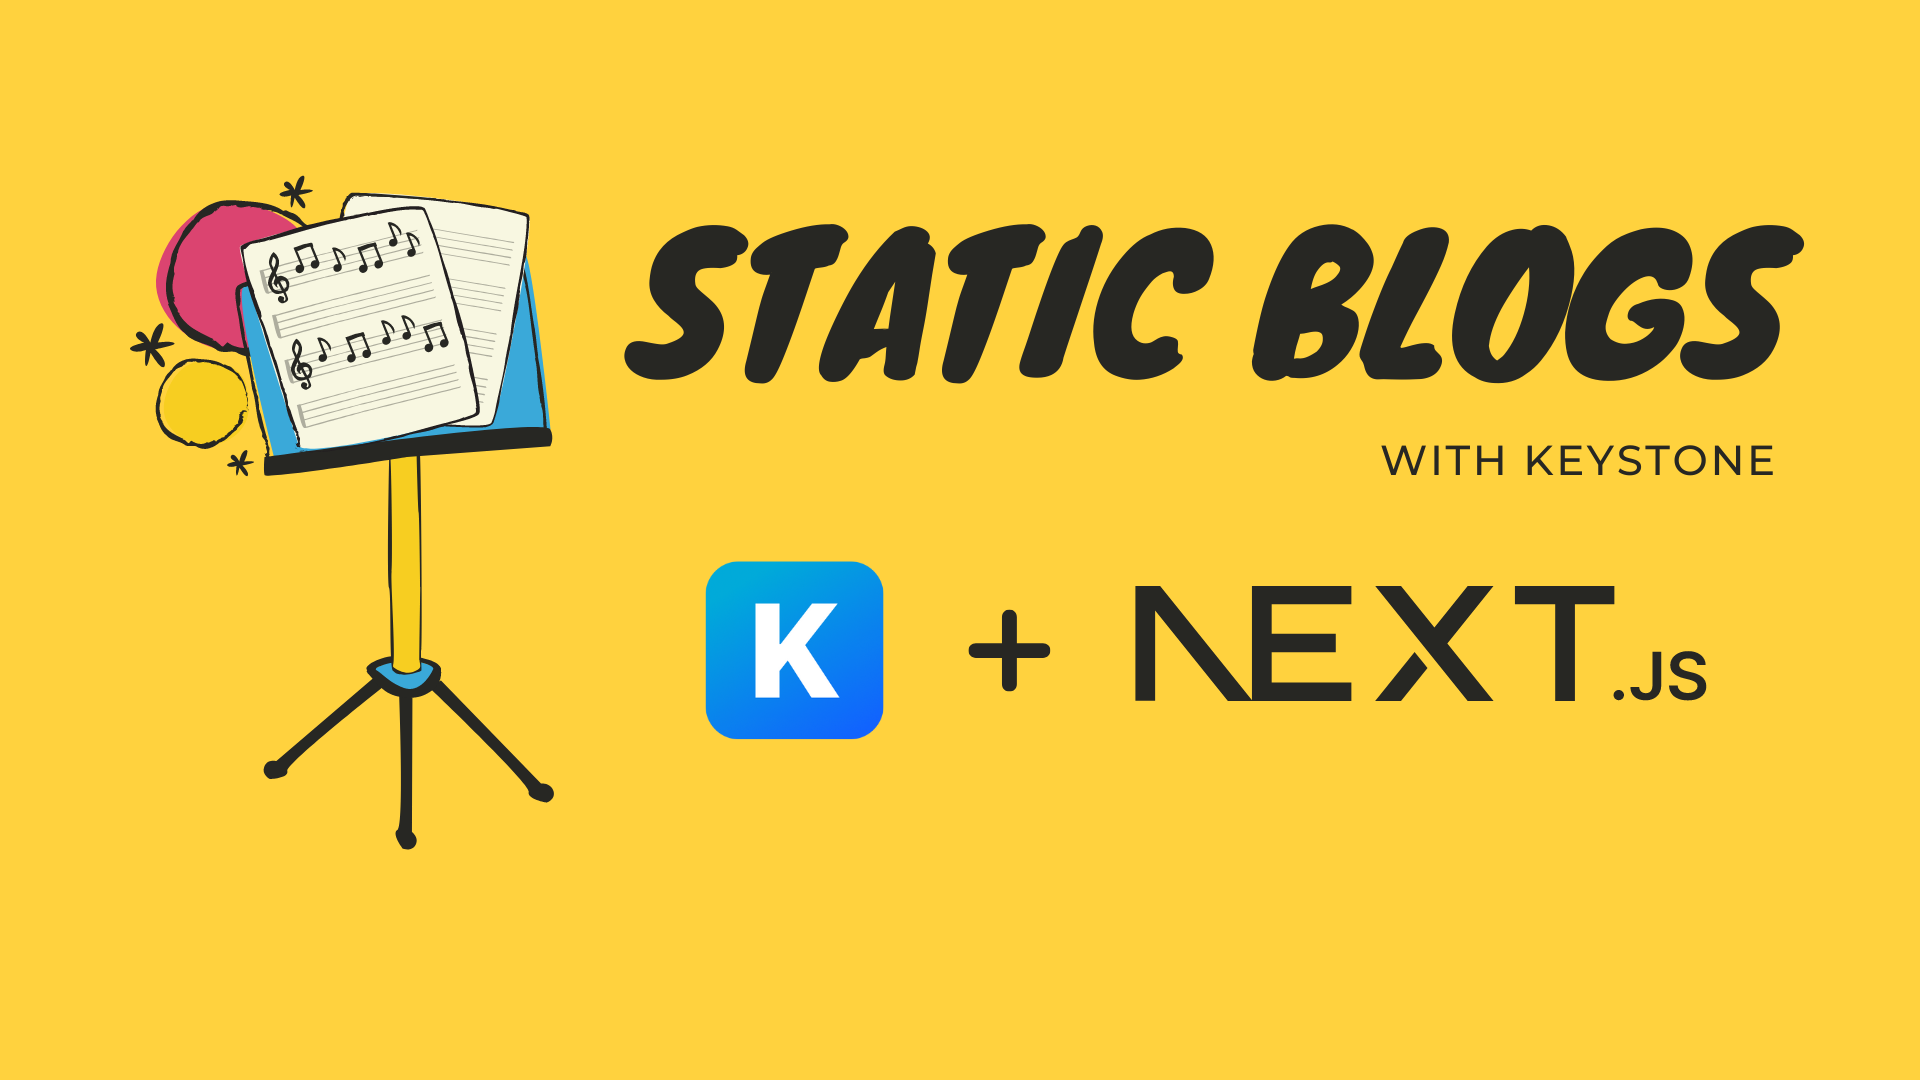 Static Blogs with Keystone